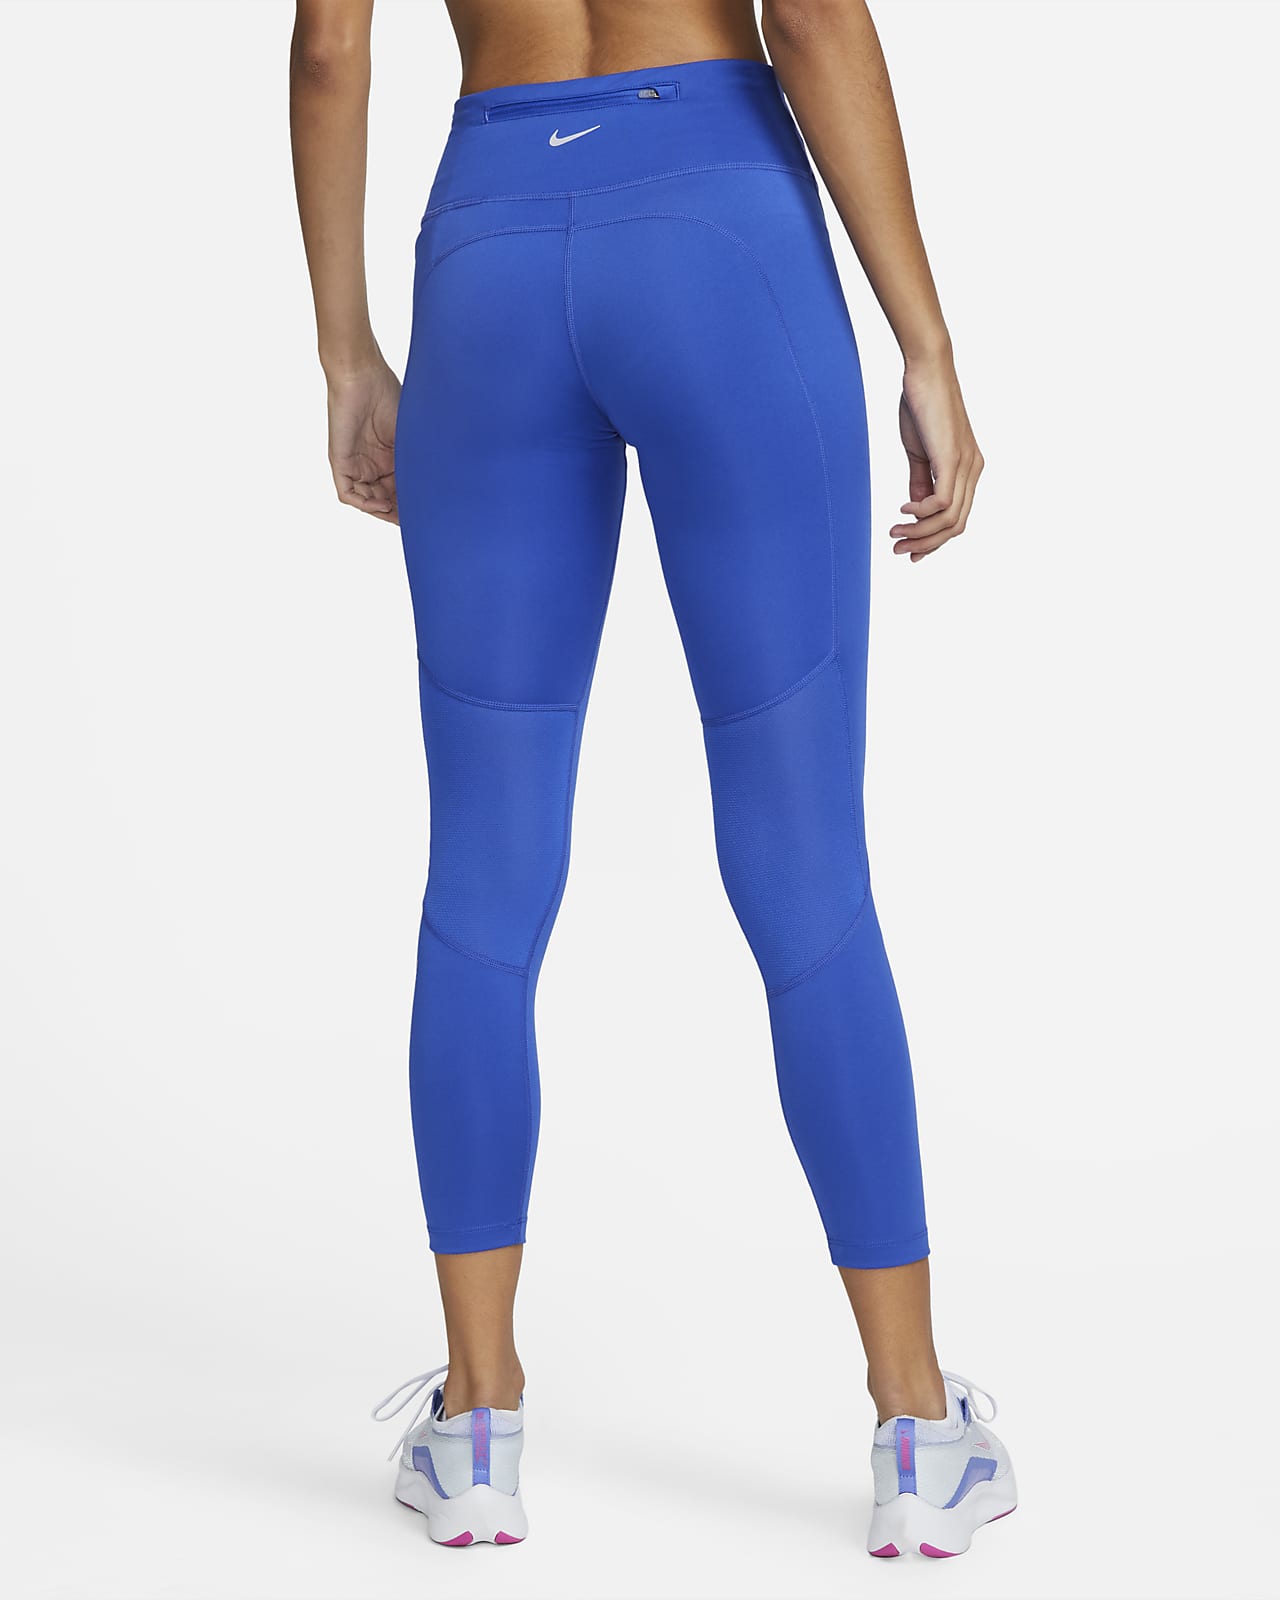 Women's S Small Nike Speed 7/8 Running Leggings Athletic Pants Blue  CU3288-058